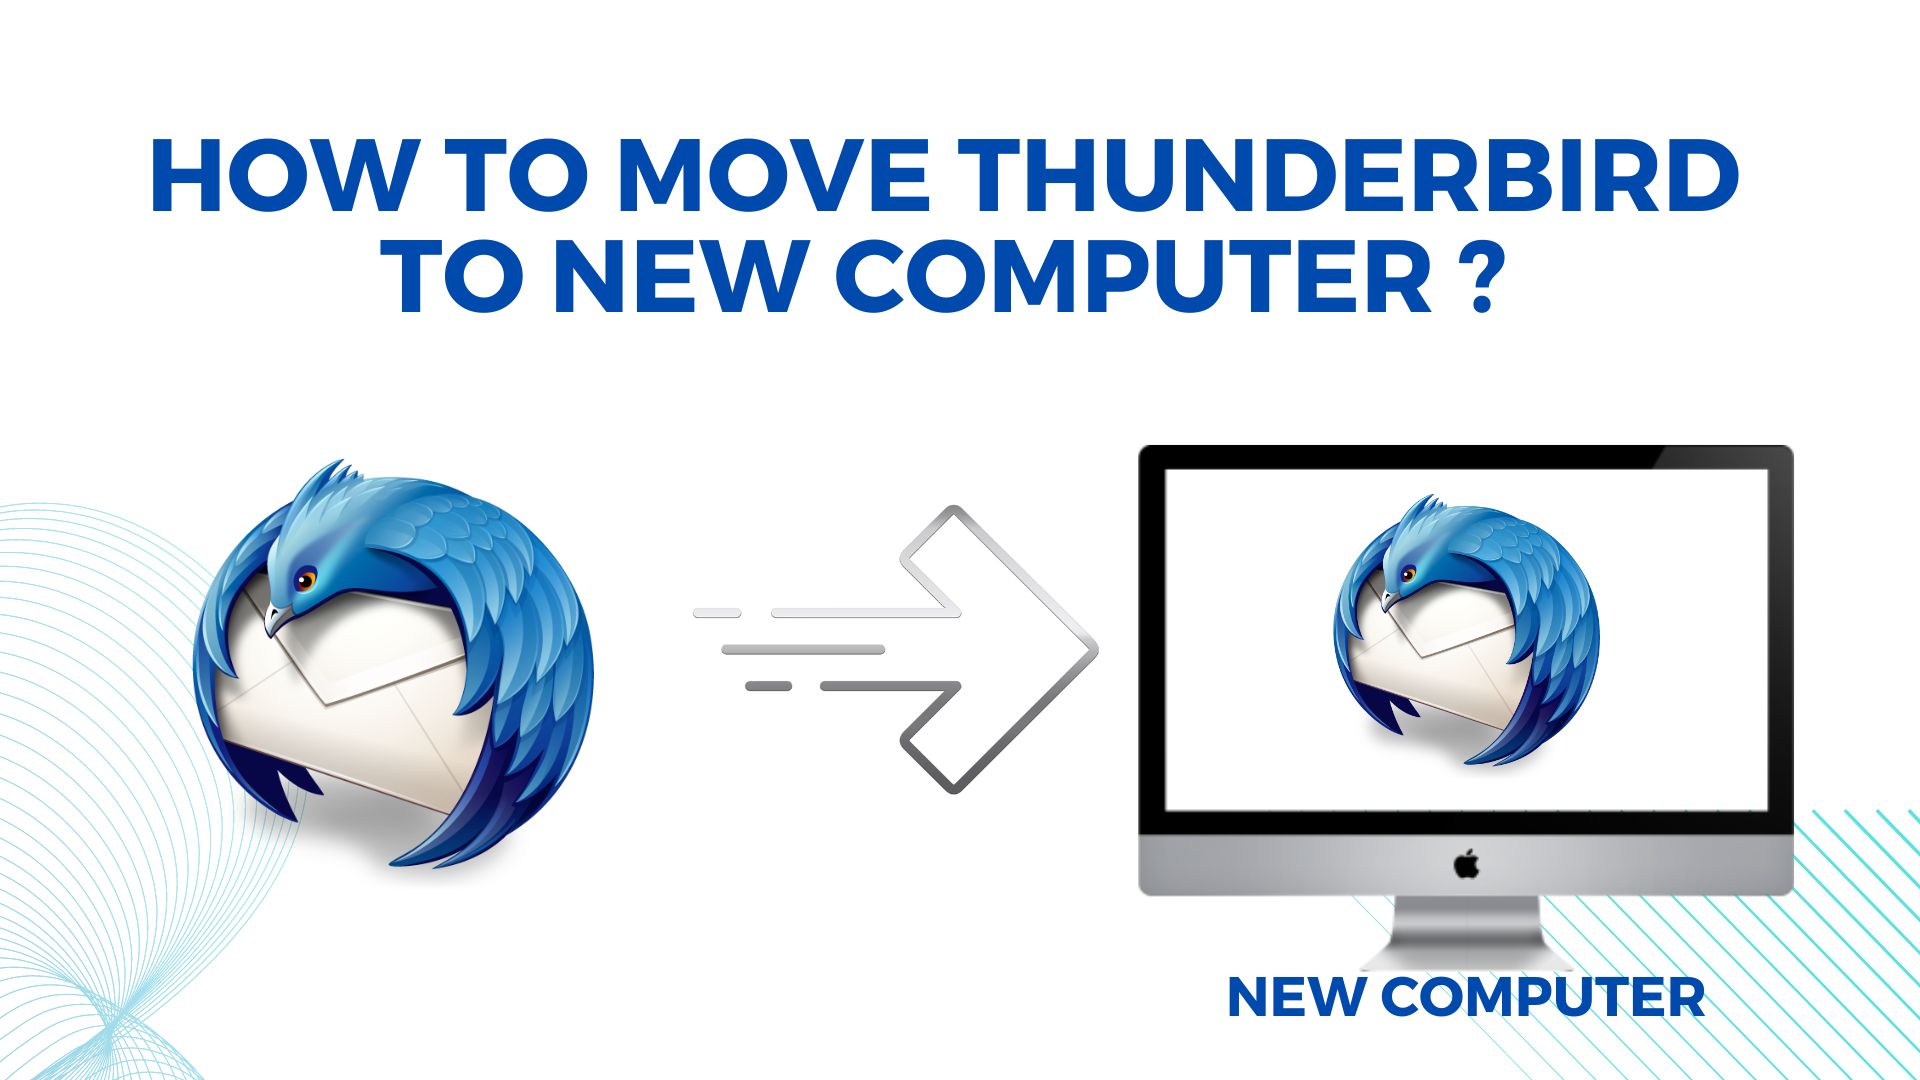 Move thunderbird to New Computer